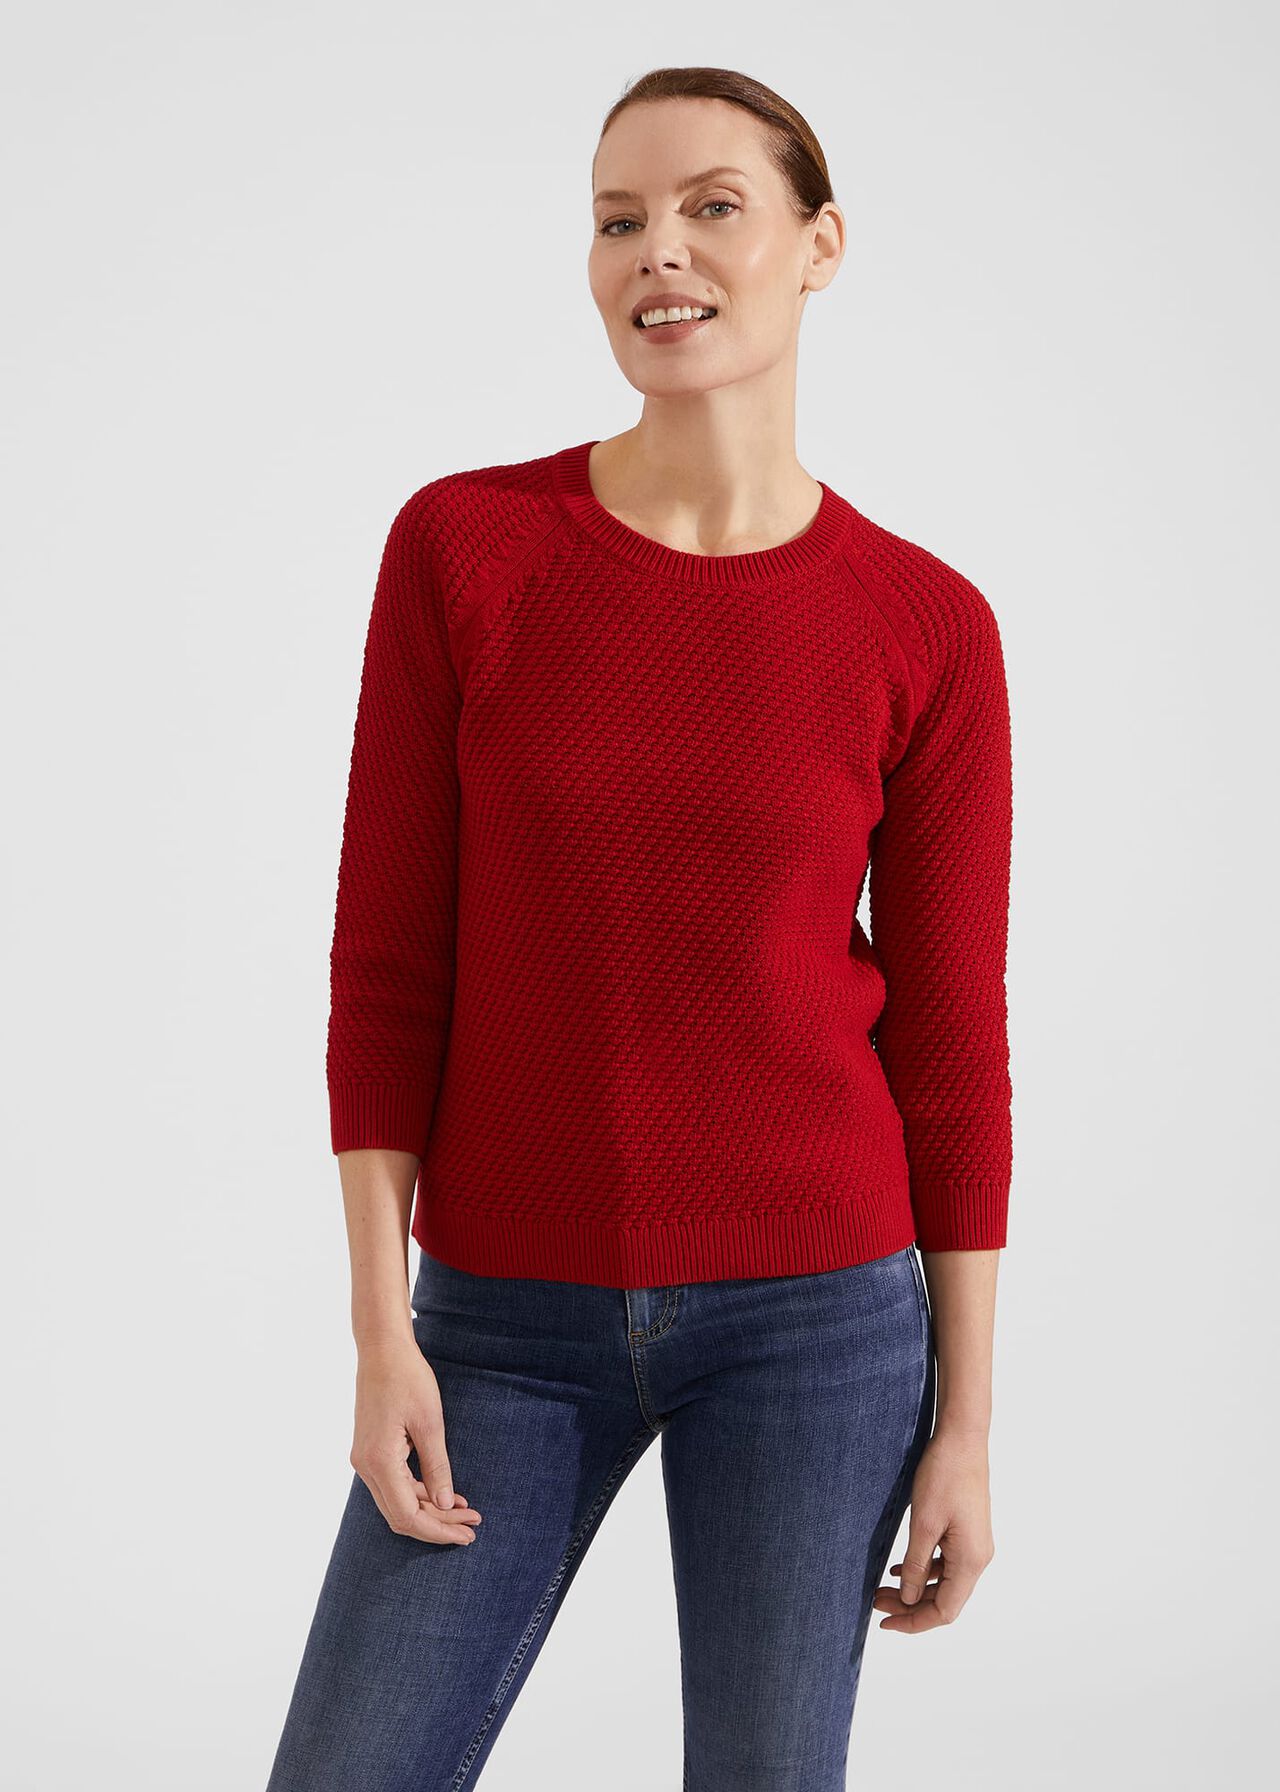 Lucie Cotton Sweater, True Red, hi-res